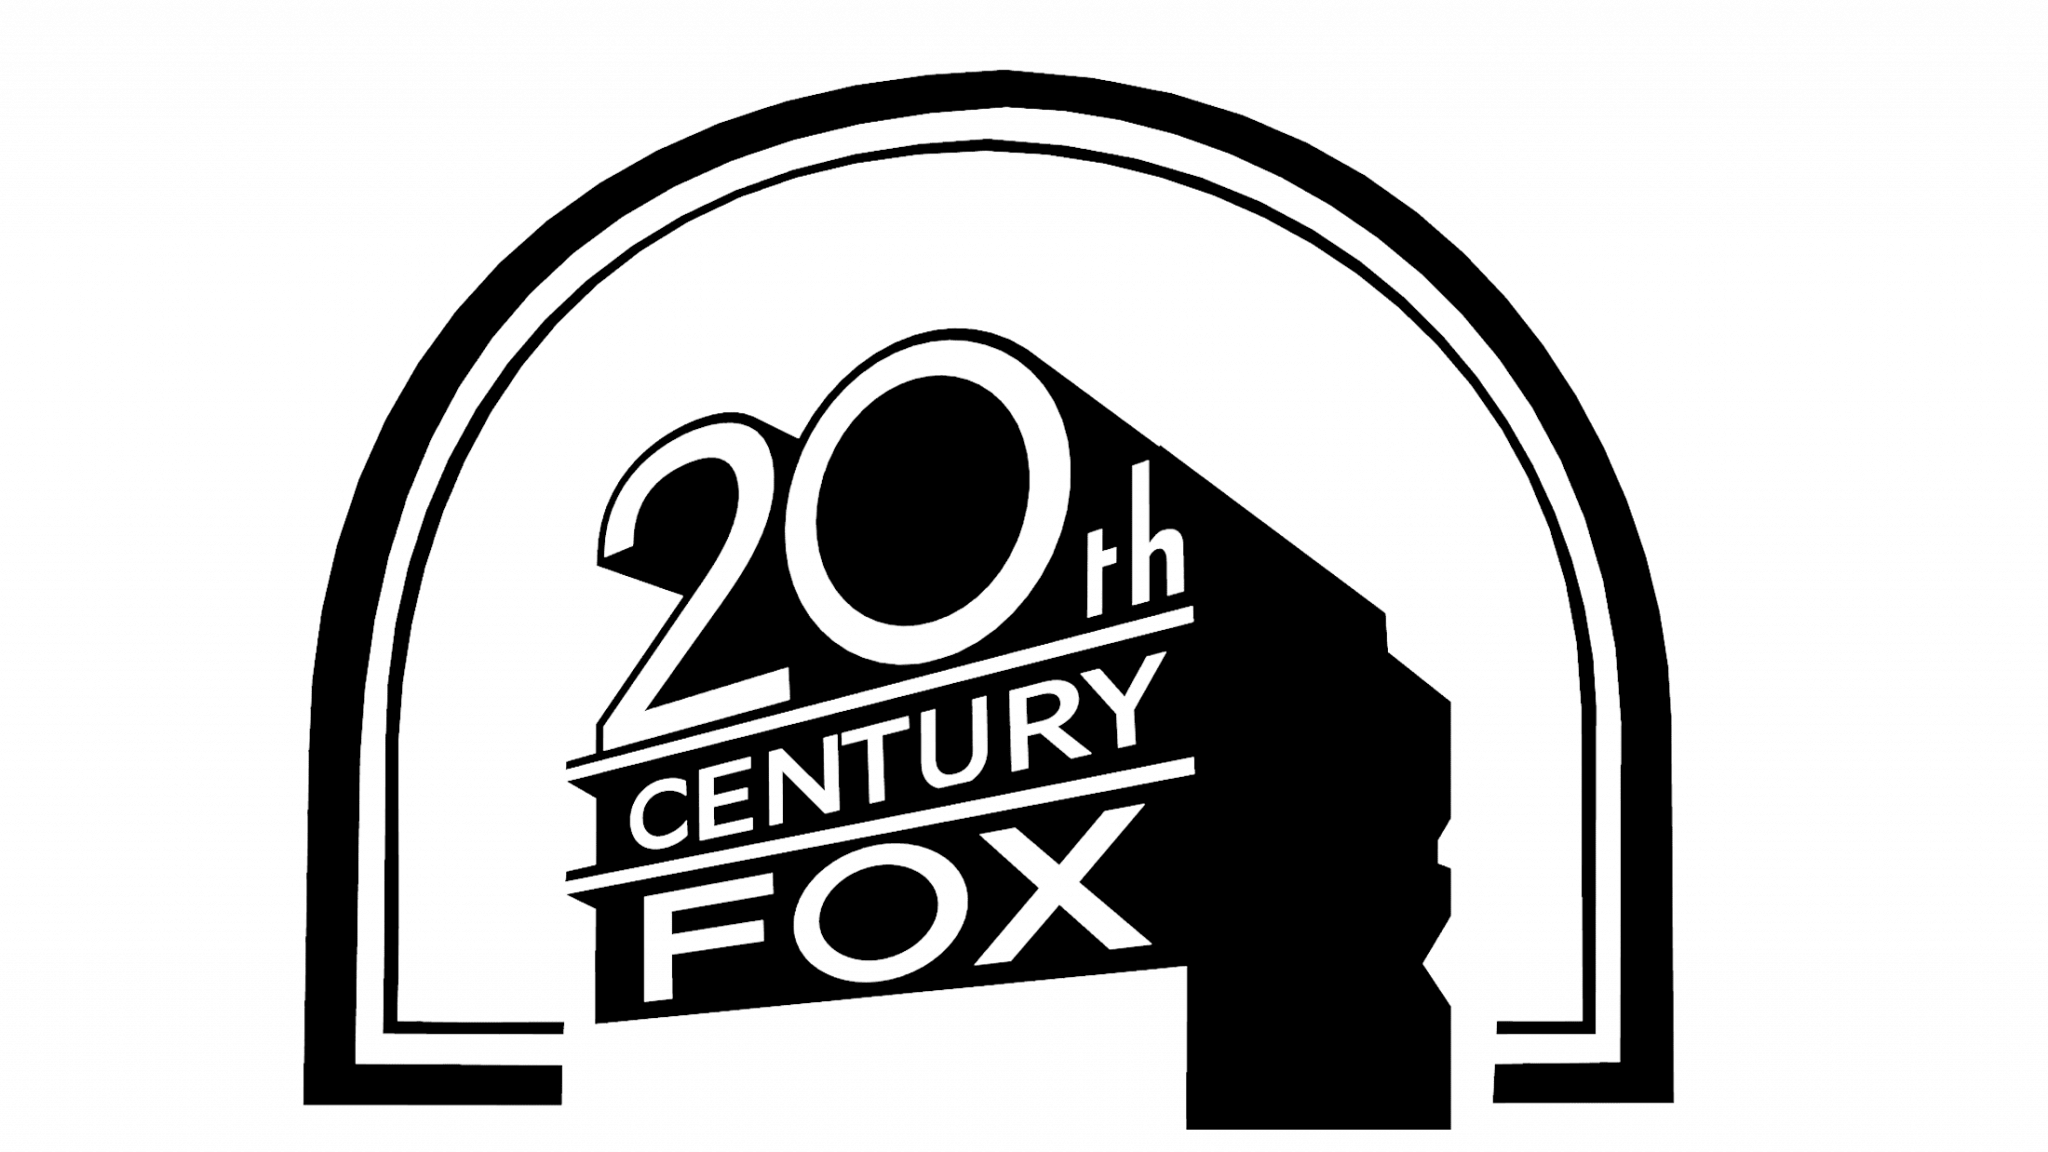 20th Century Foxtheme Logo Image for Free - Free Logo Image